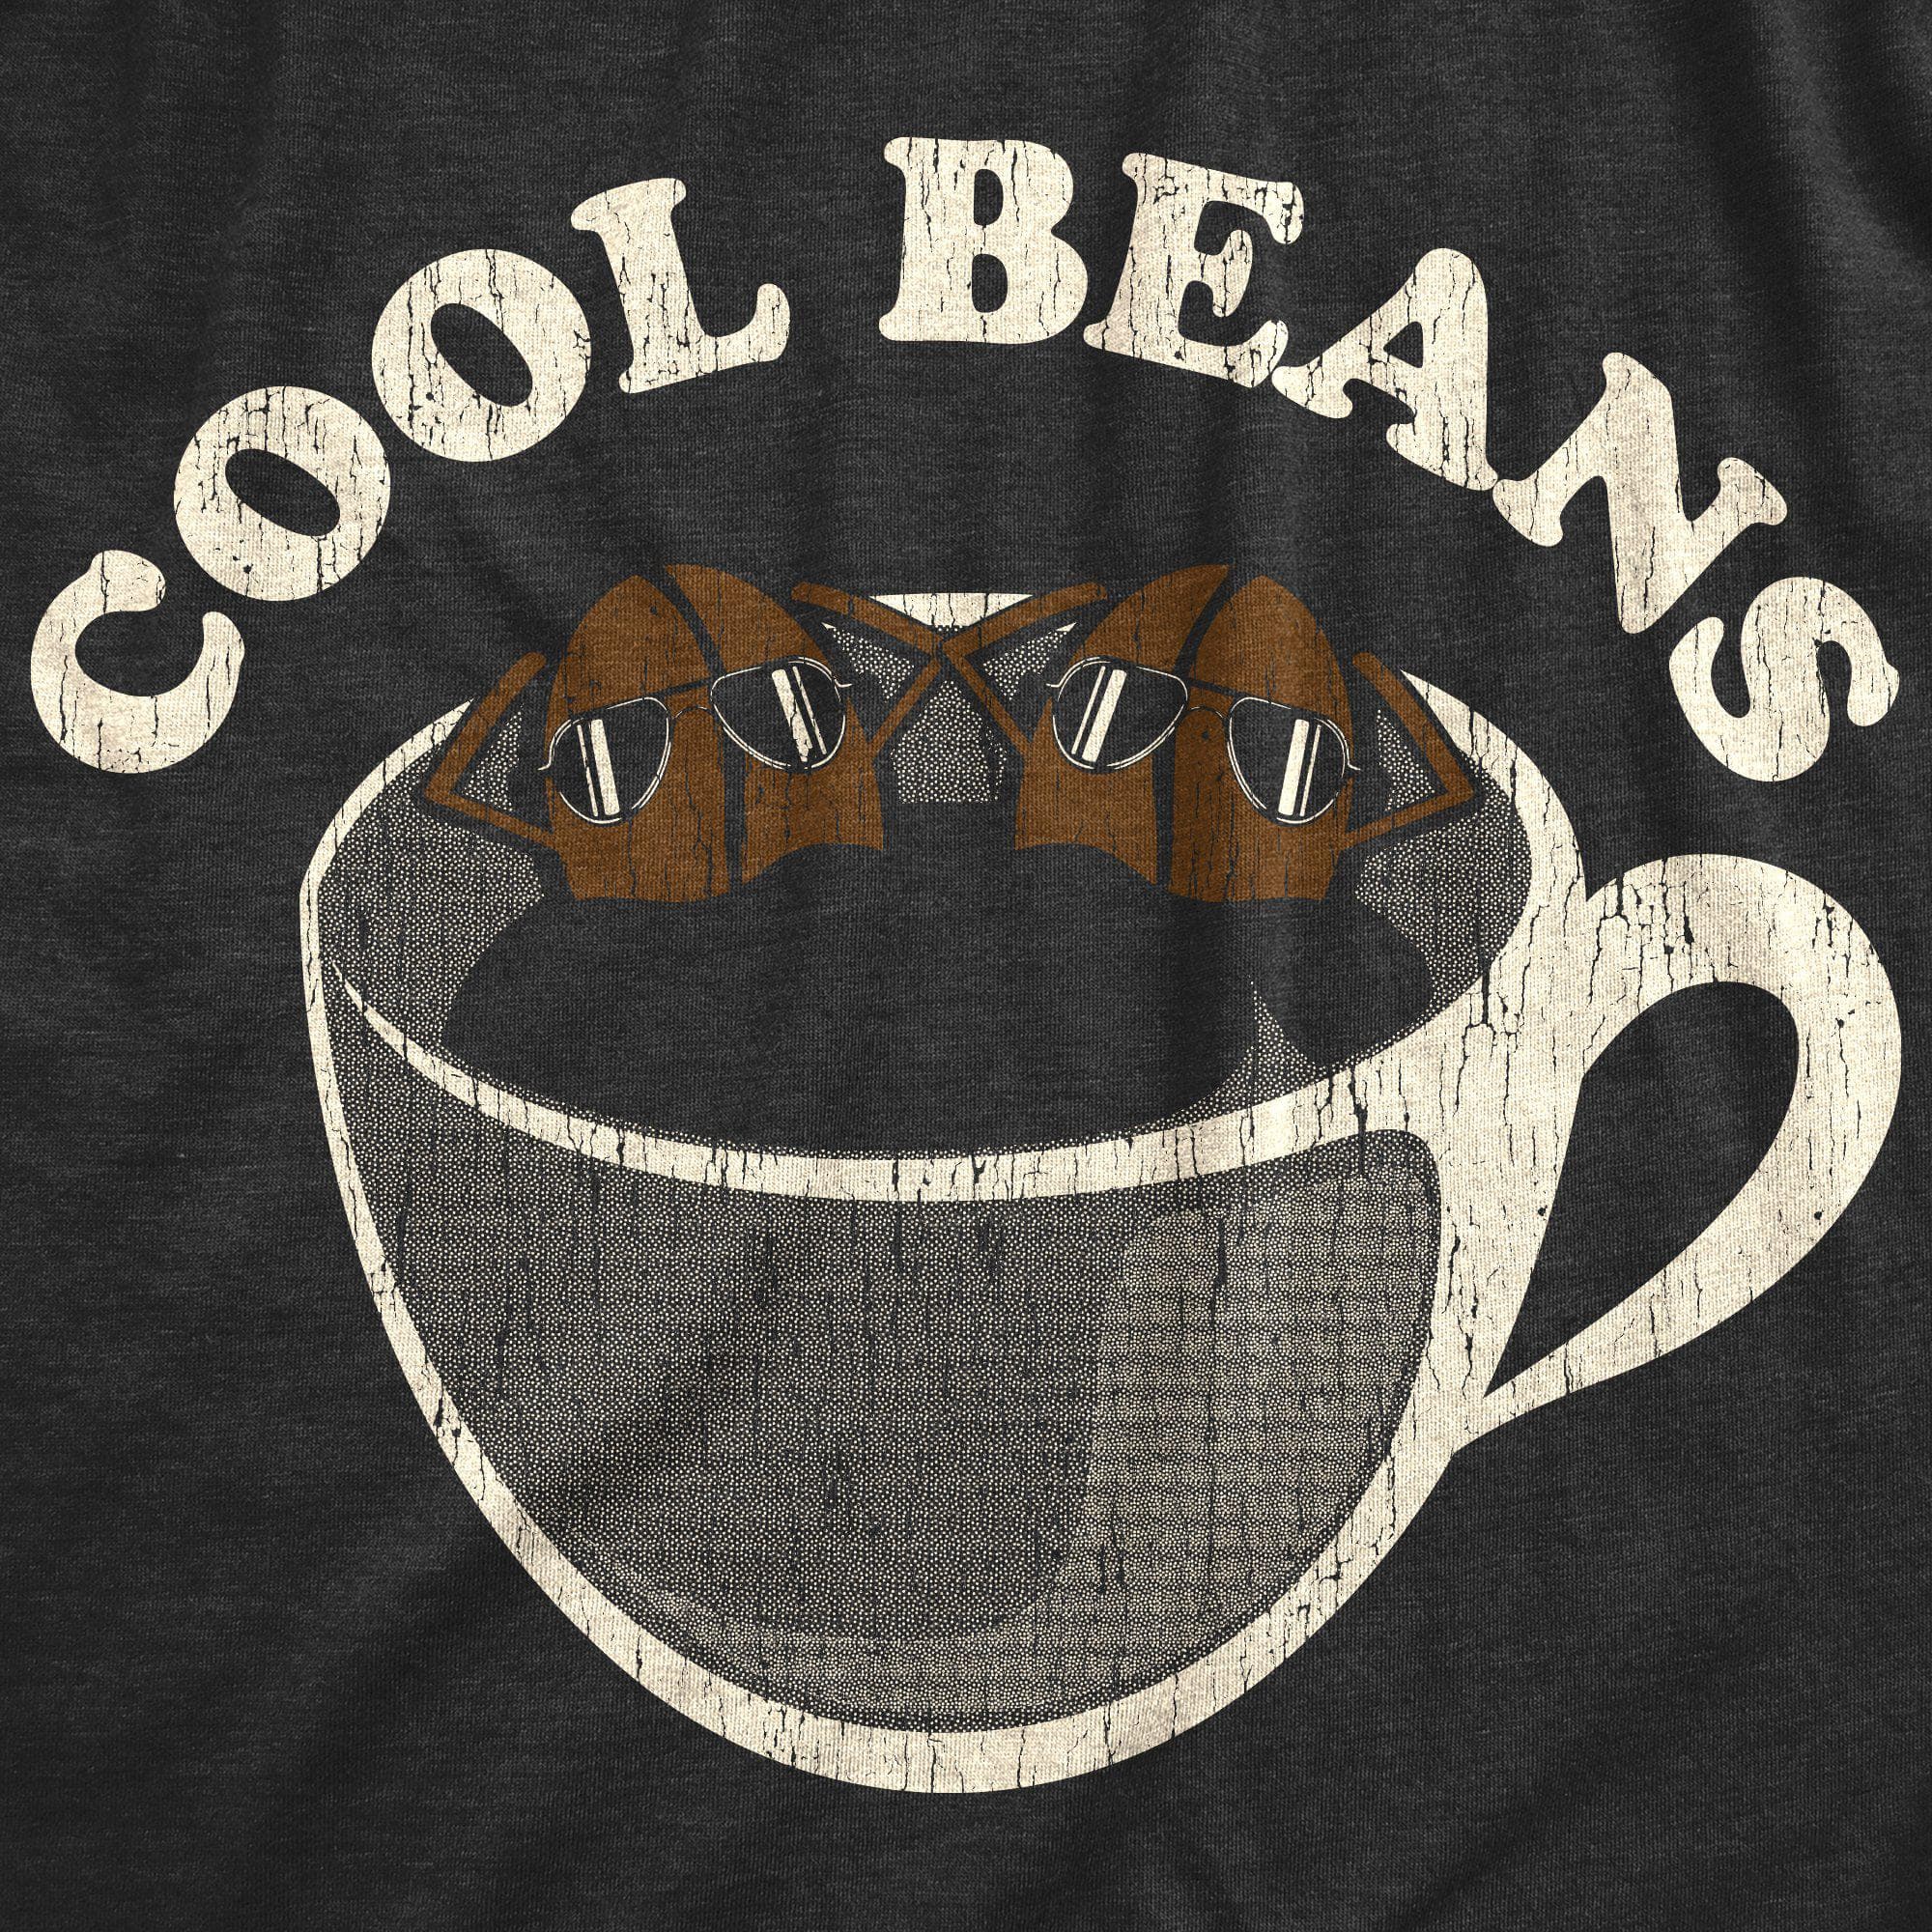 Cool Beans Women's Tshirt - Crazy Dog T-Shirts